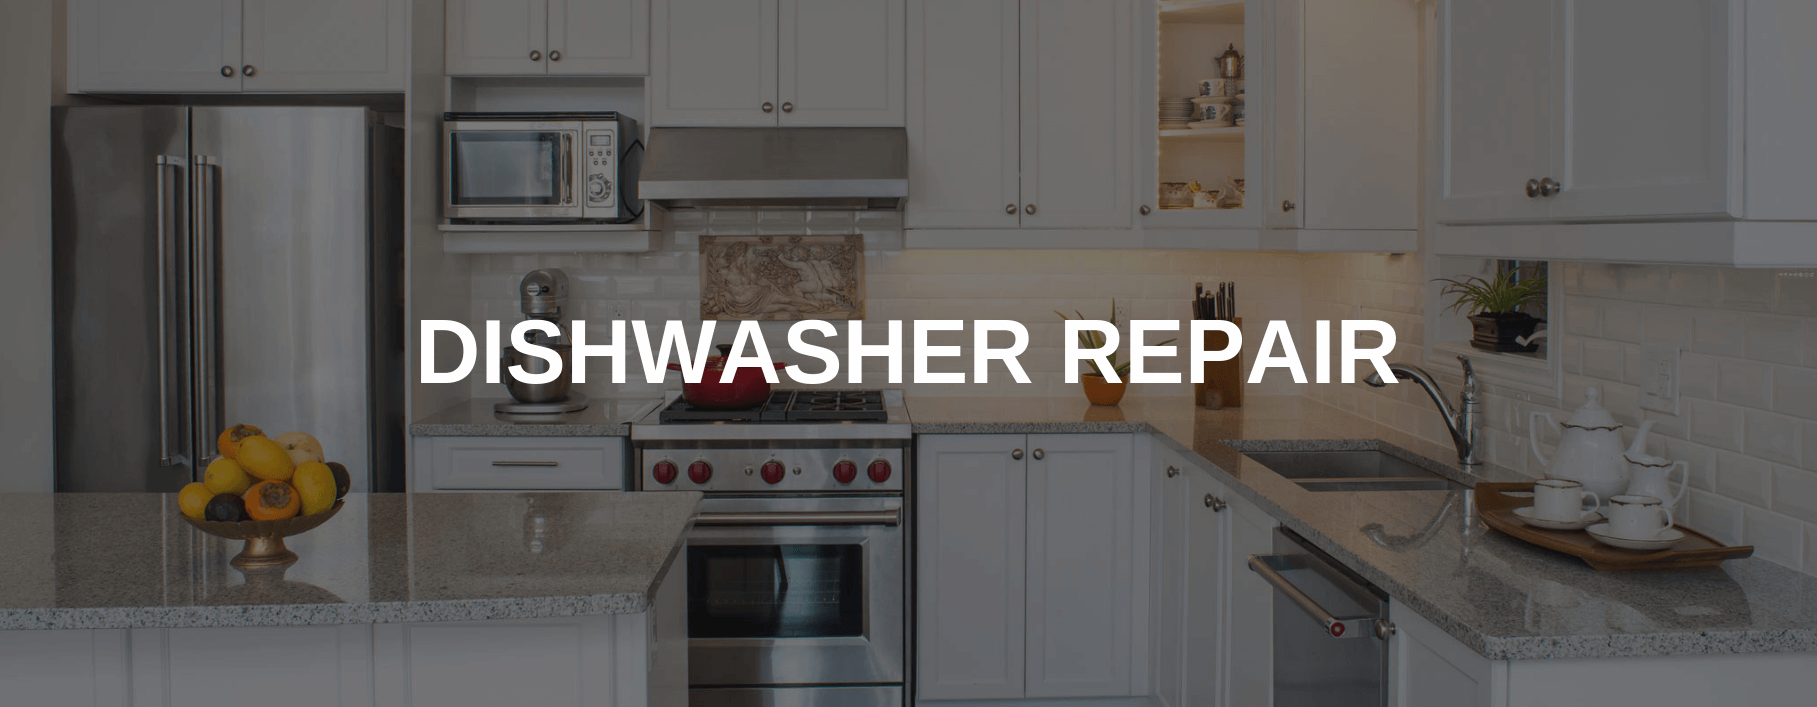 dishwasher repair el monte